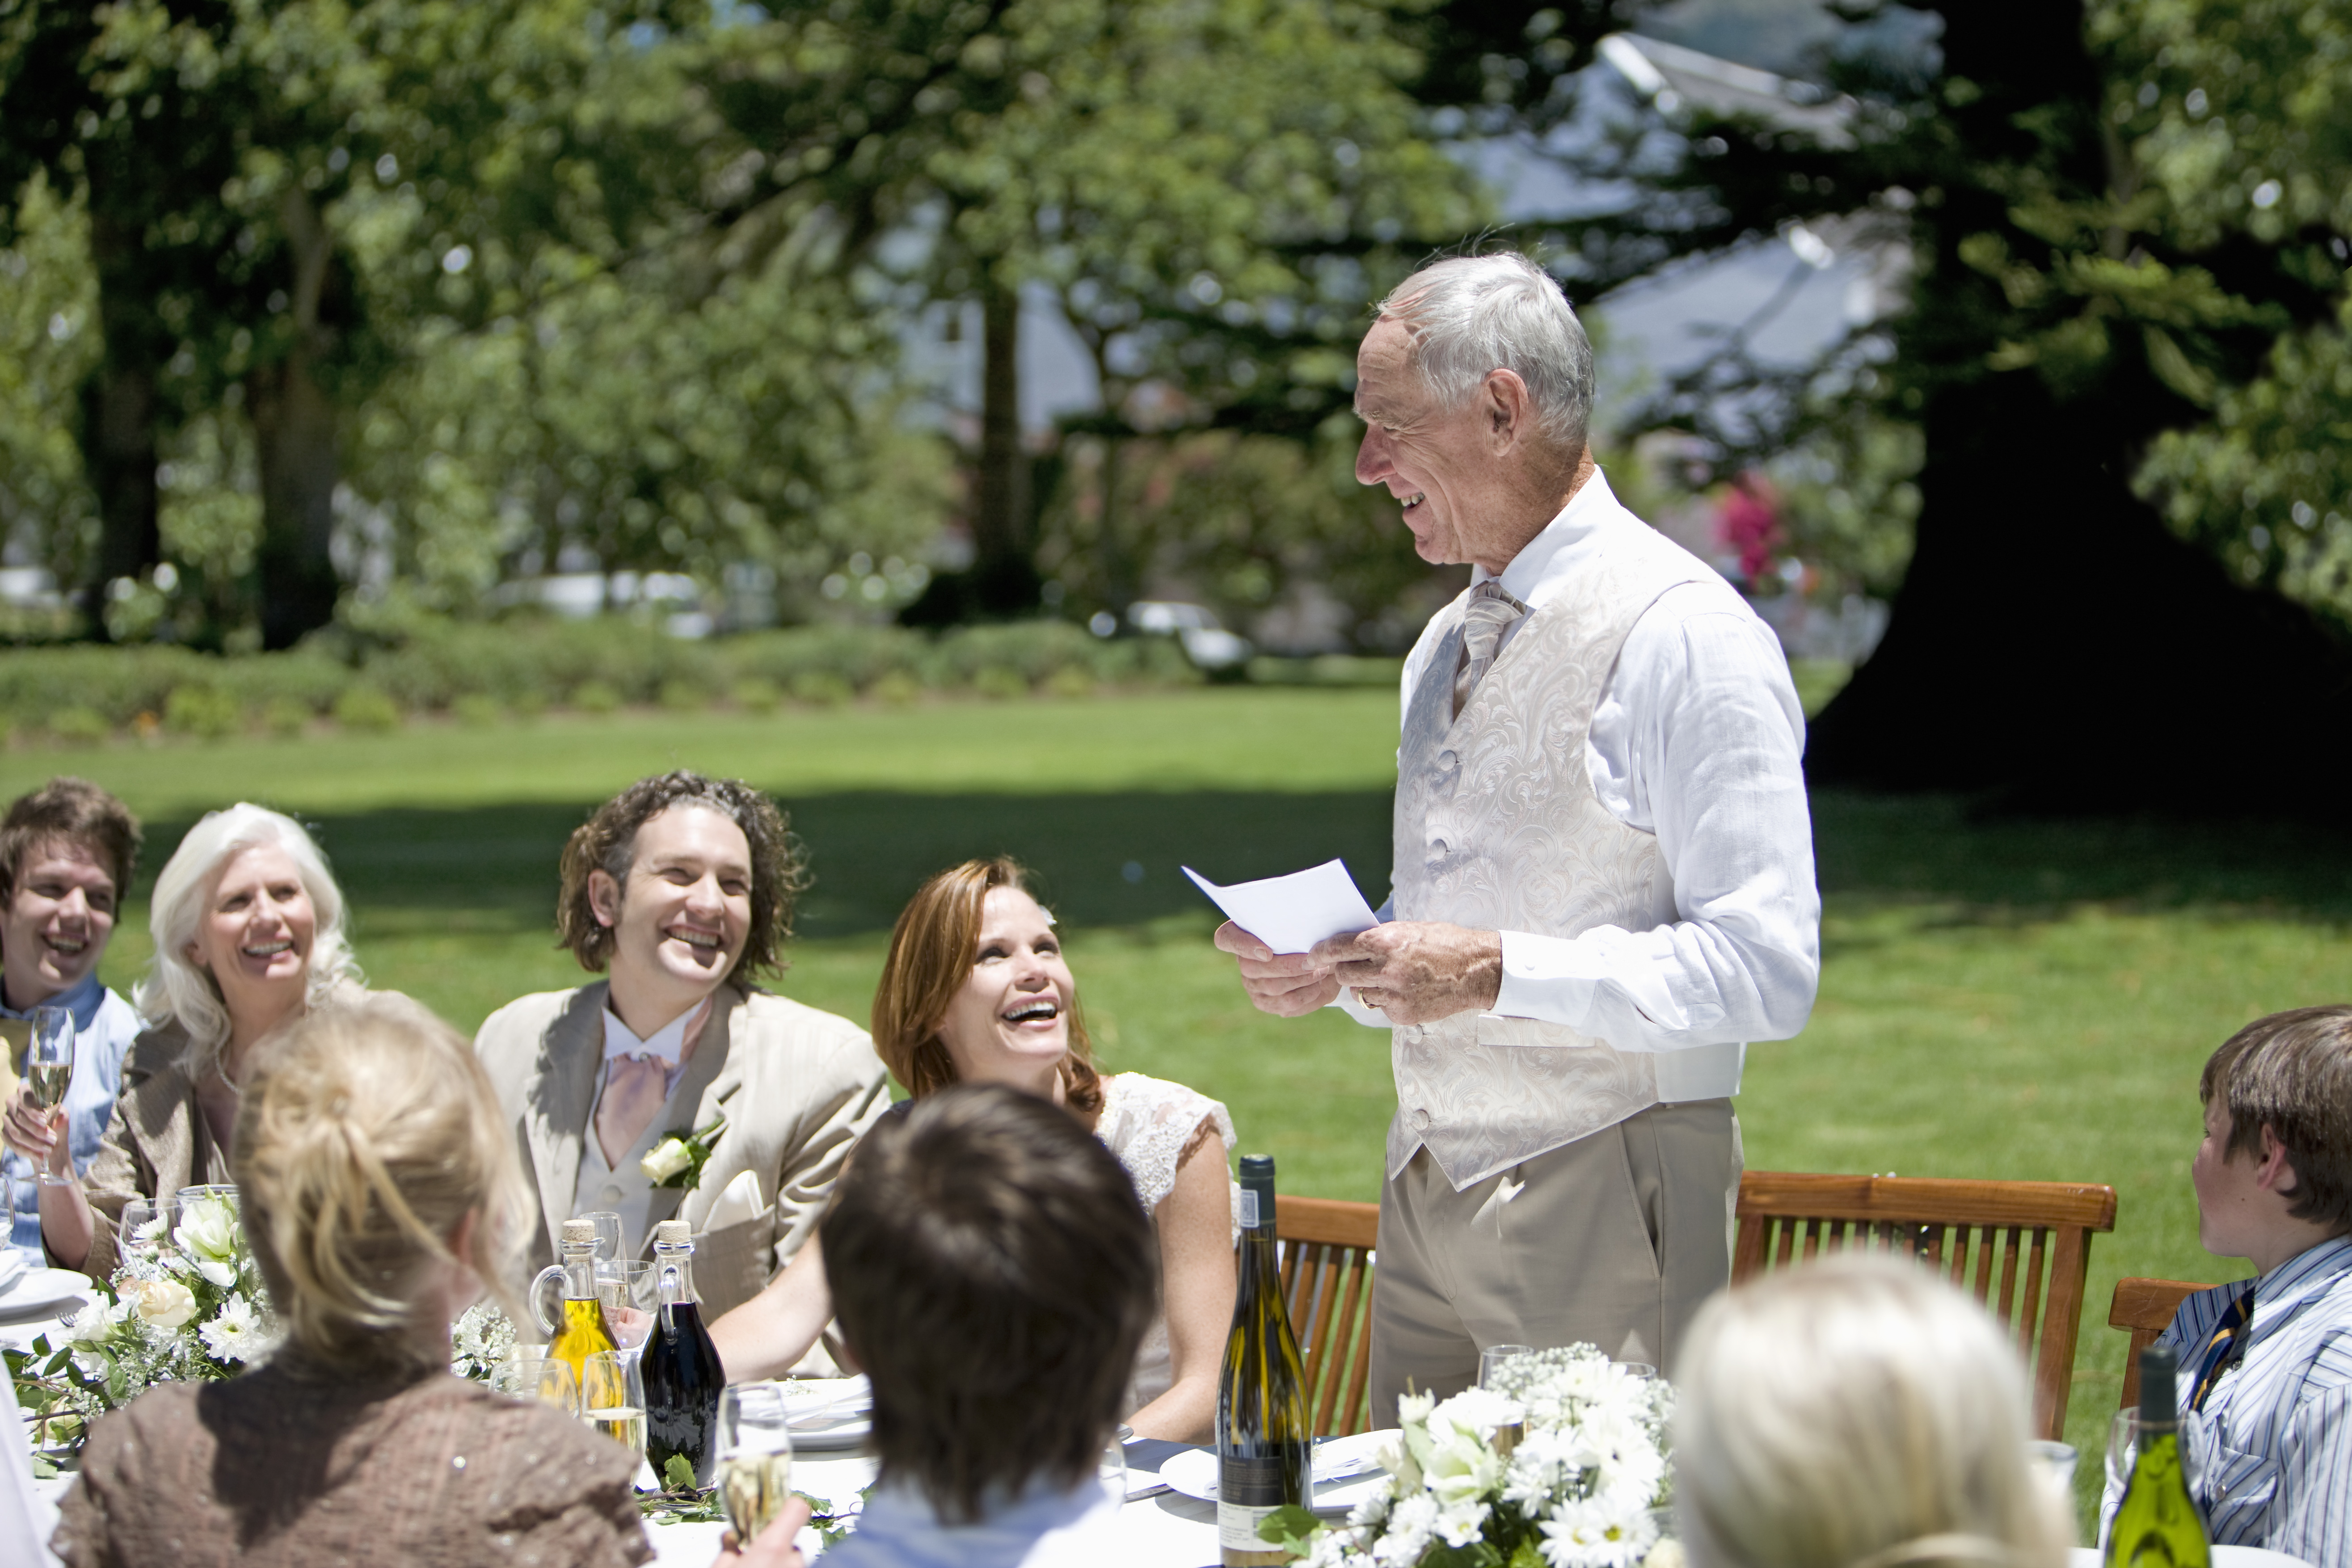 A man speaking at a wedding | Source: Shutterstock